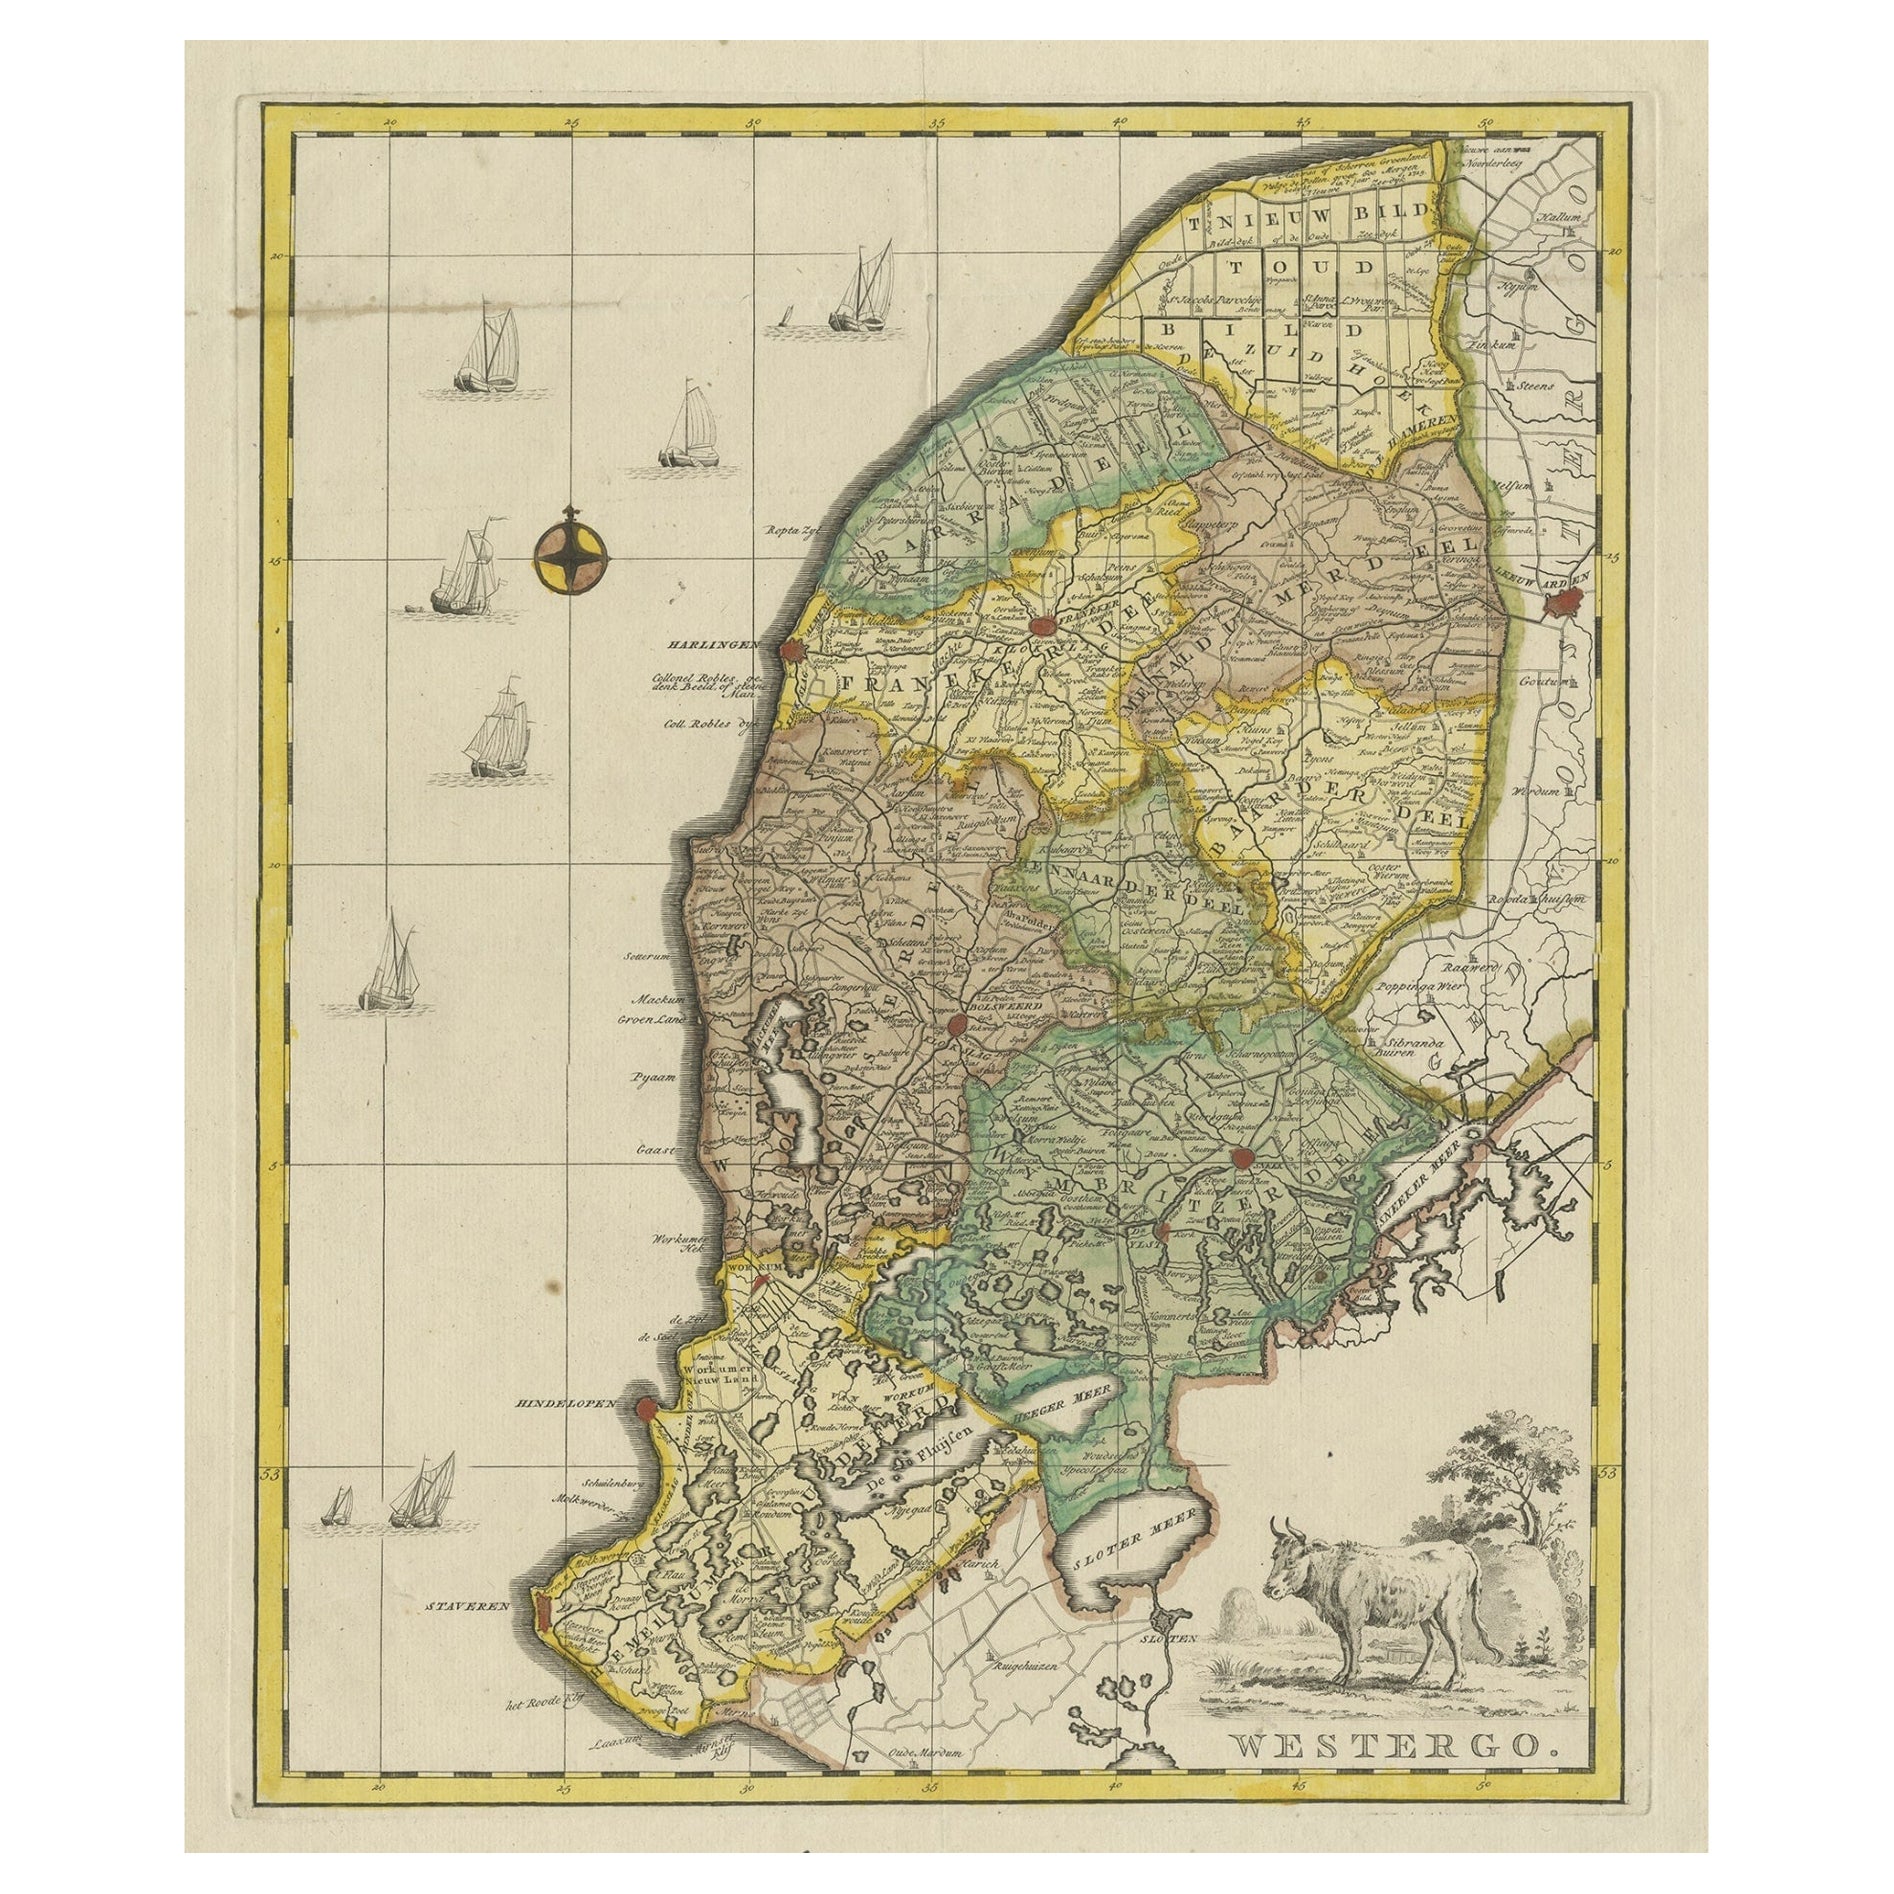 Original Copper-Engraving of Westergo, Part of Friesland, the Netherlands, 1744